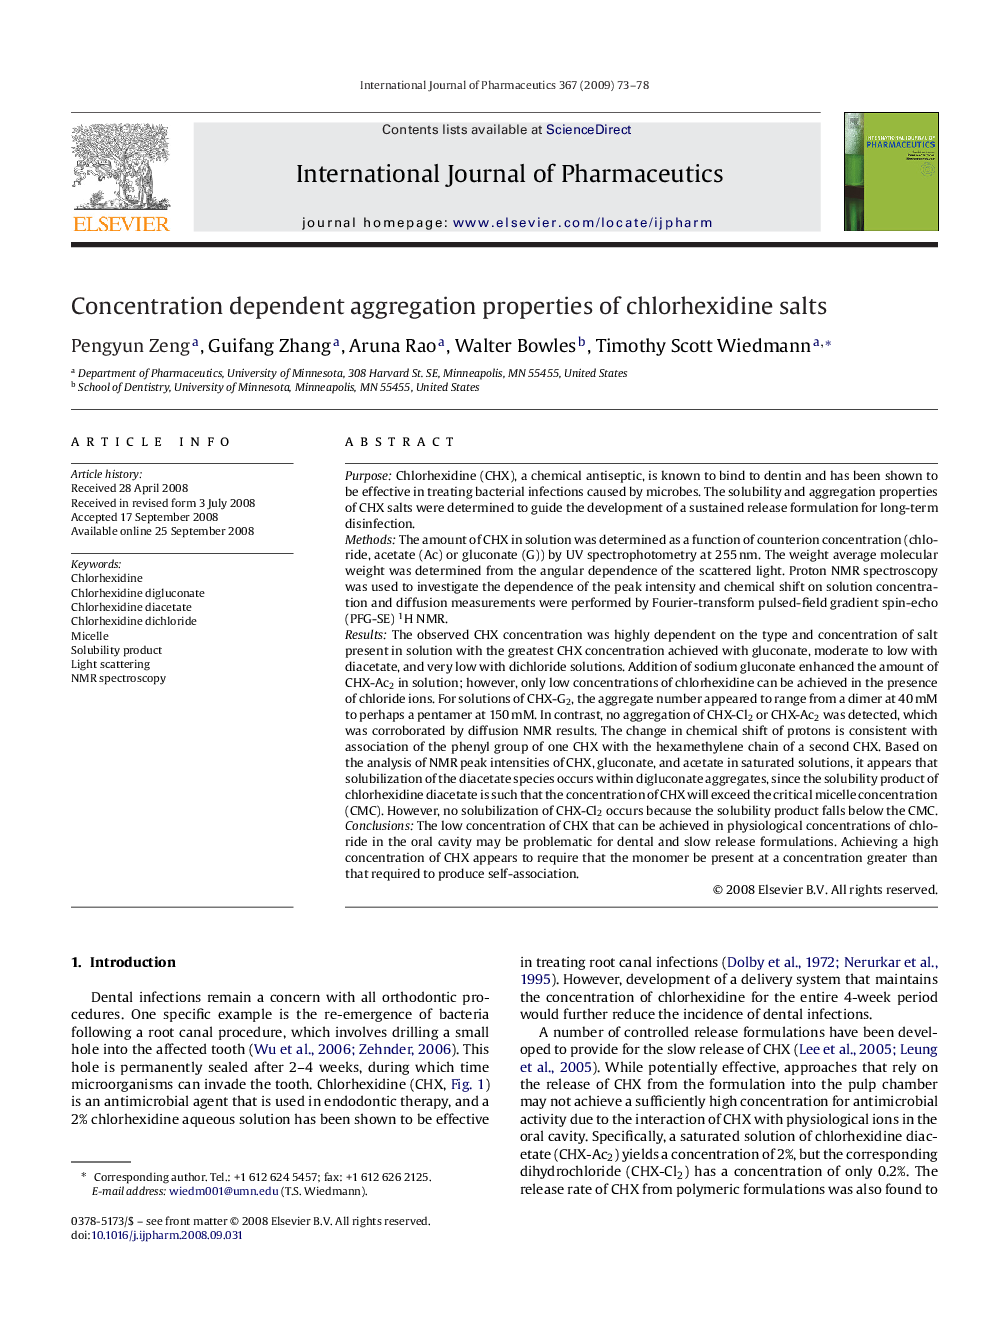 Concentration dependent aggregation properties of chlorhexidine salts